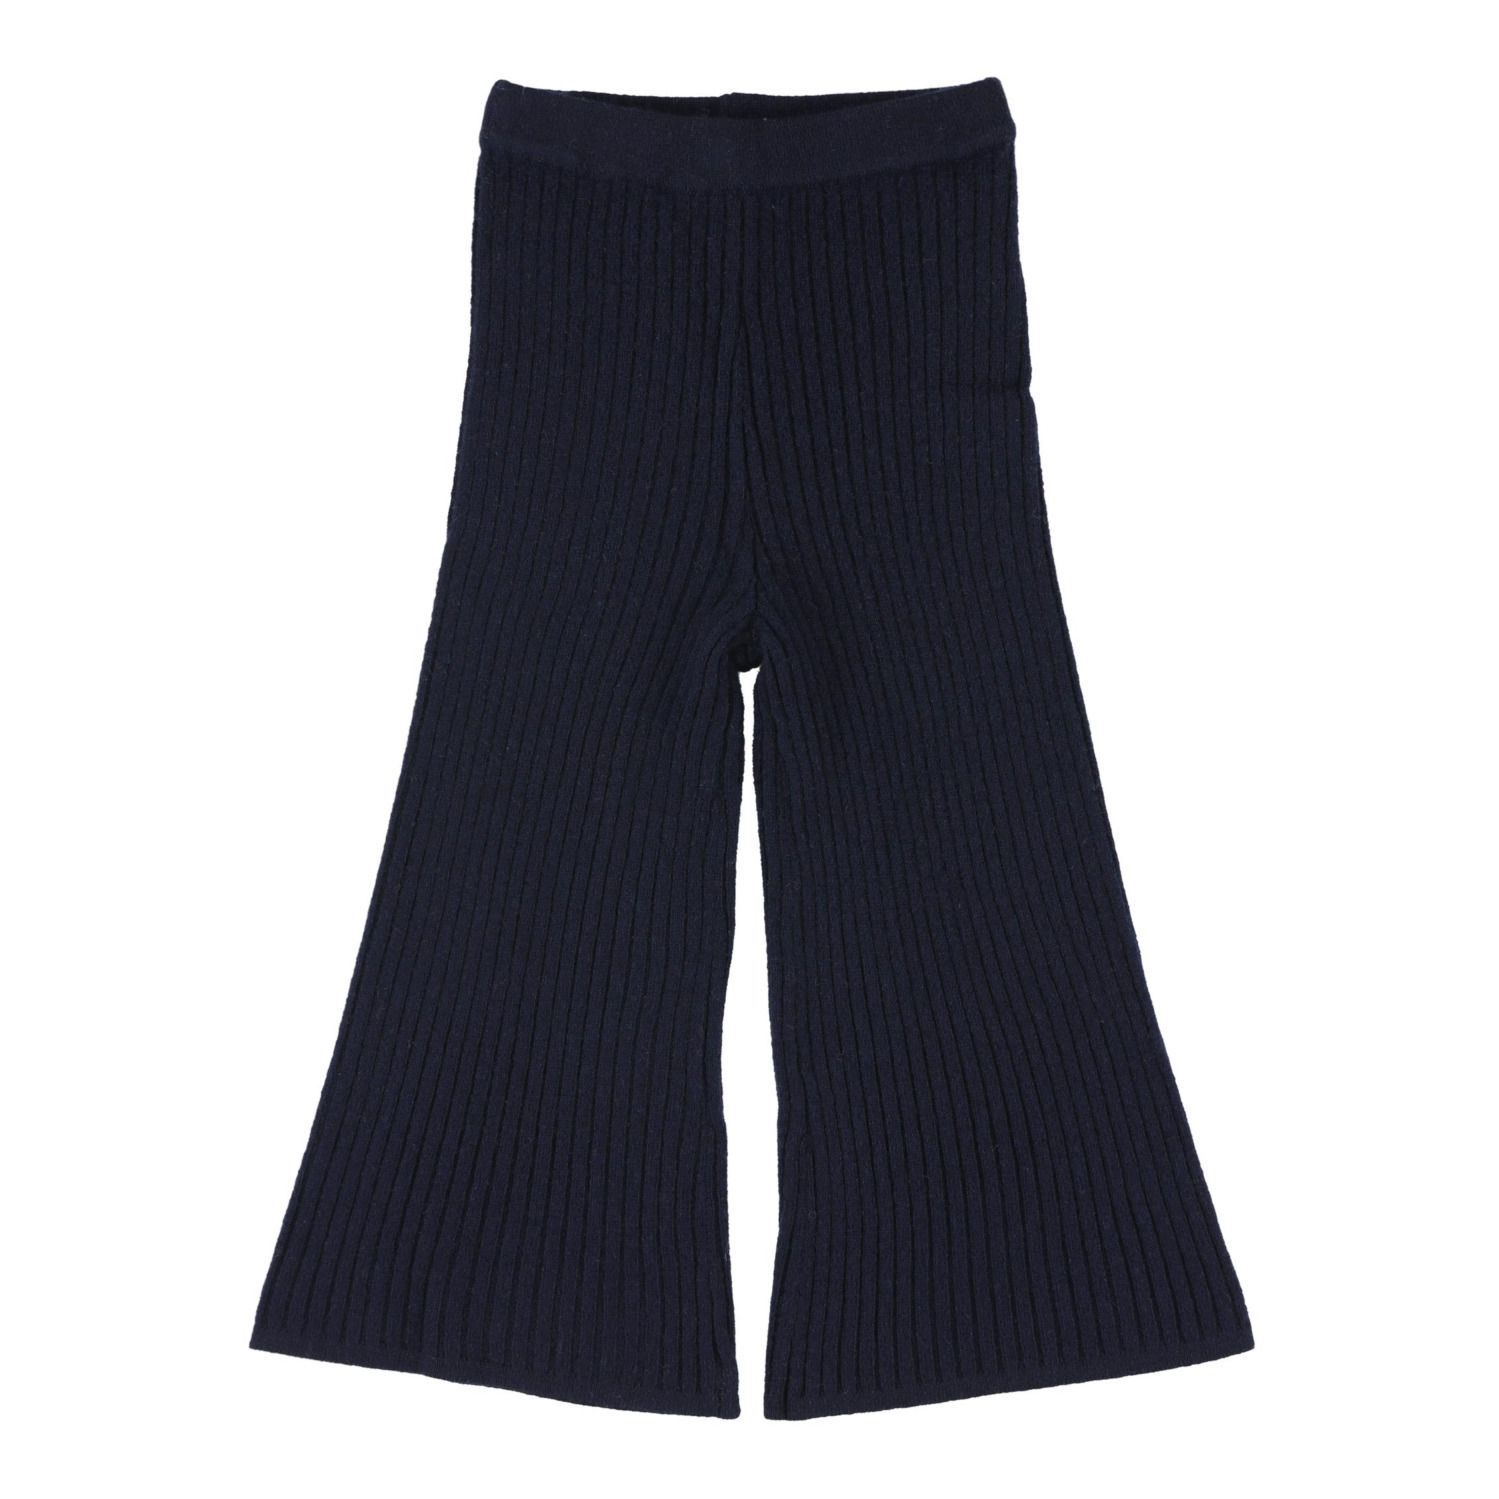 Morley - Pantalon Côtelé Ona - Fille - Bleu marine